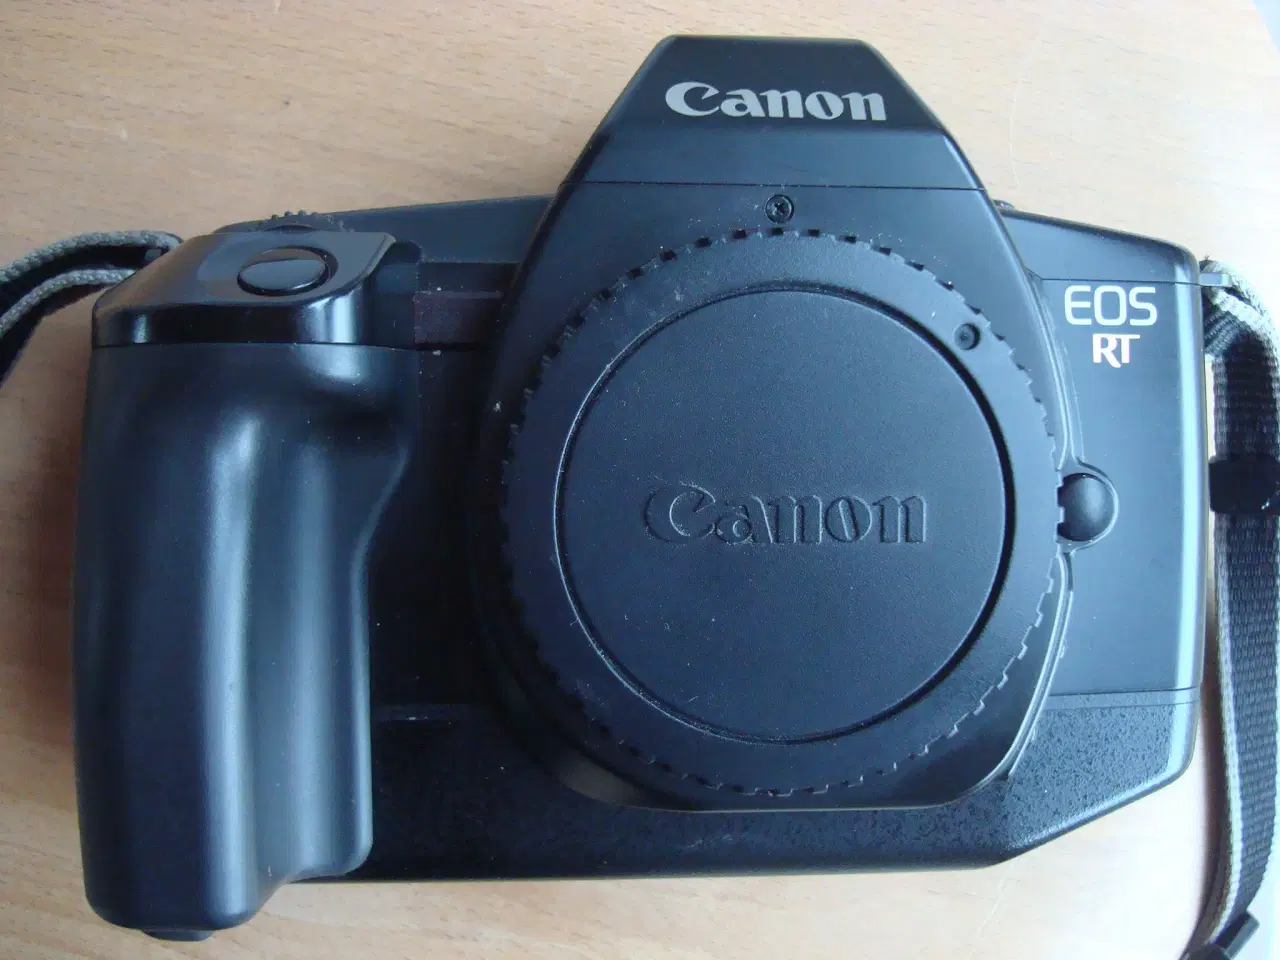 Billede 1 - Semi Prof Canon EOS RT sort kamerahus